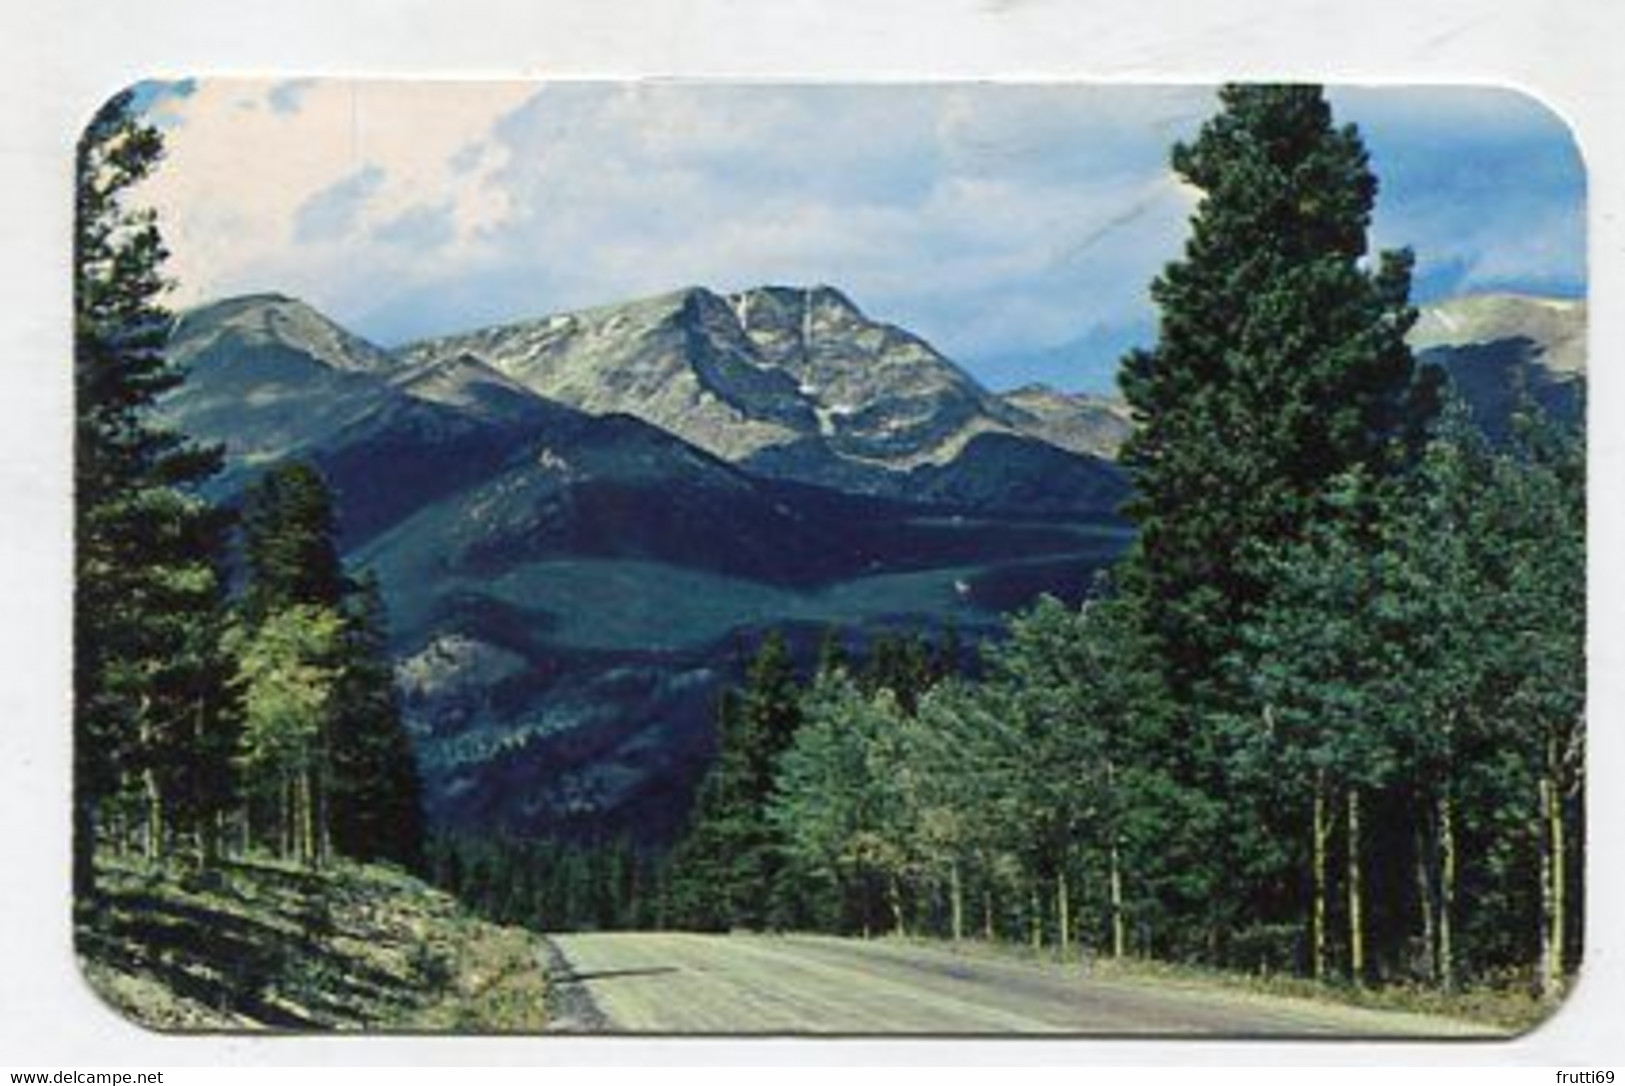 AK 107020 USA - Colorado - Rocky Mountain National Park - Mt. Ypsilon - Rocky Mountains